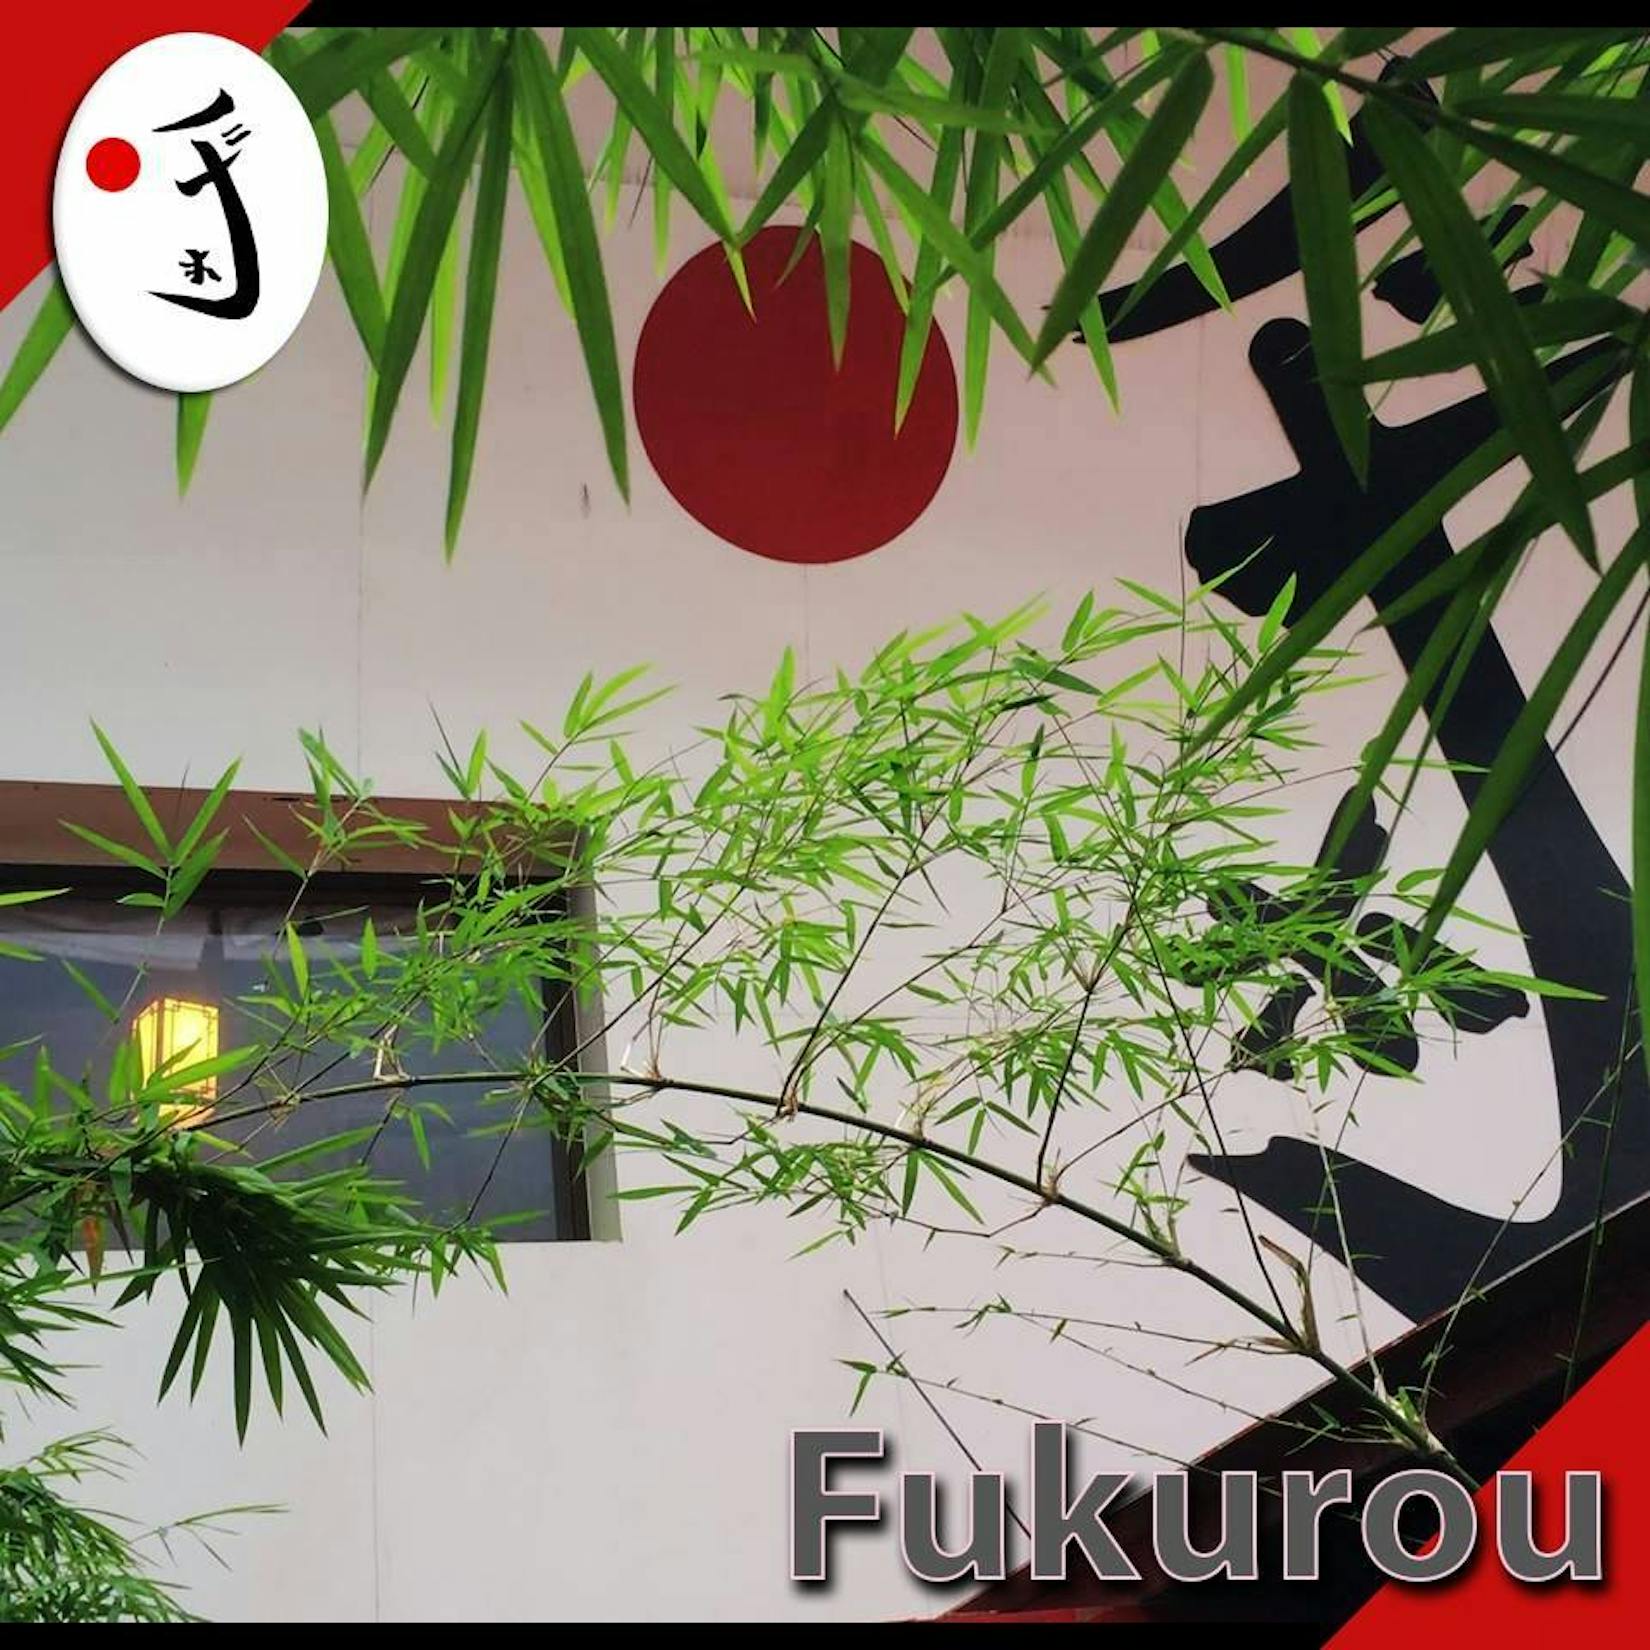 Dining Fukurou Japanese Restaurant | yathar